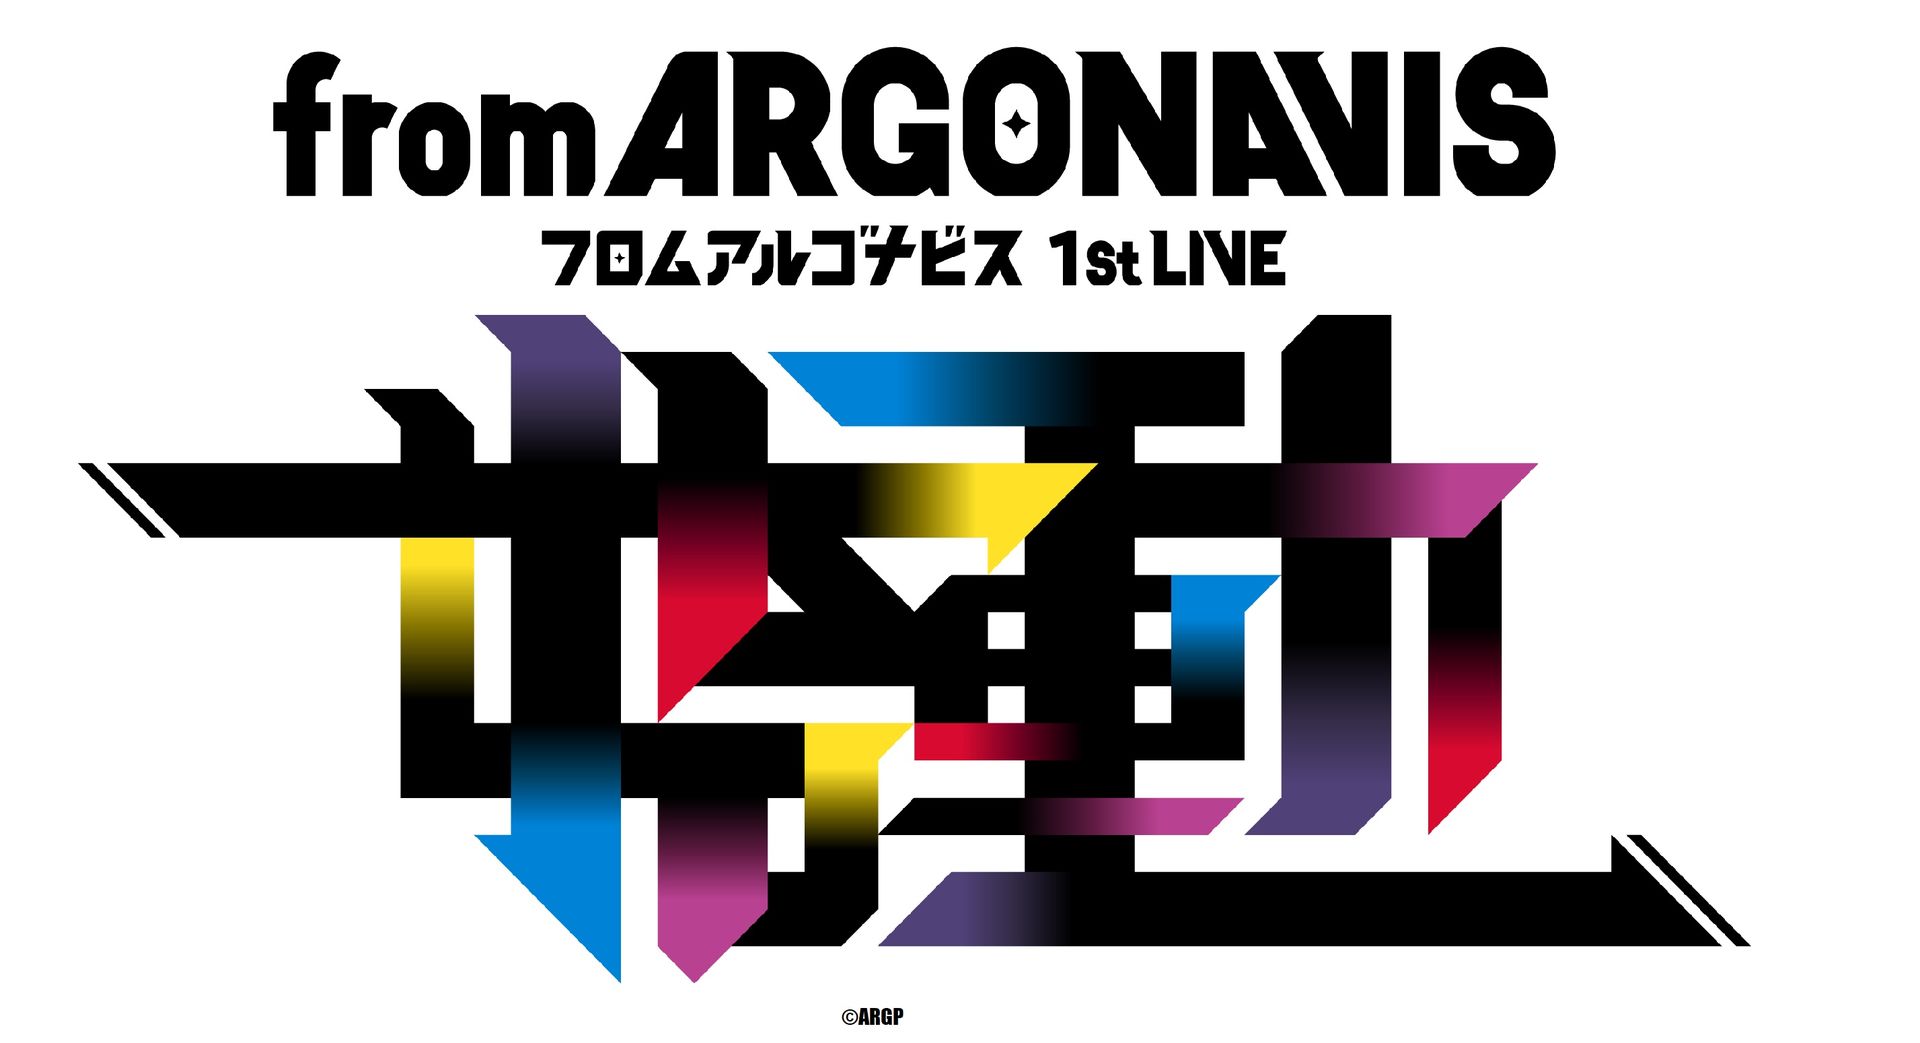 [Streaming+] from ARGONAVIS 1st LIVEー始動ー